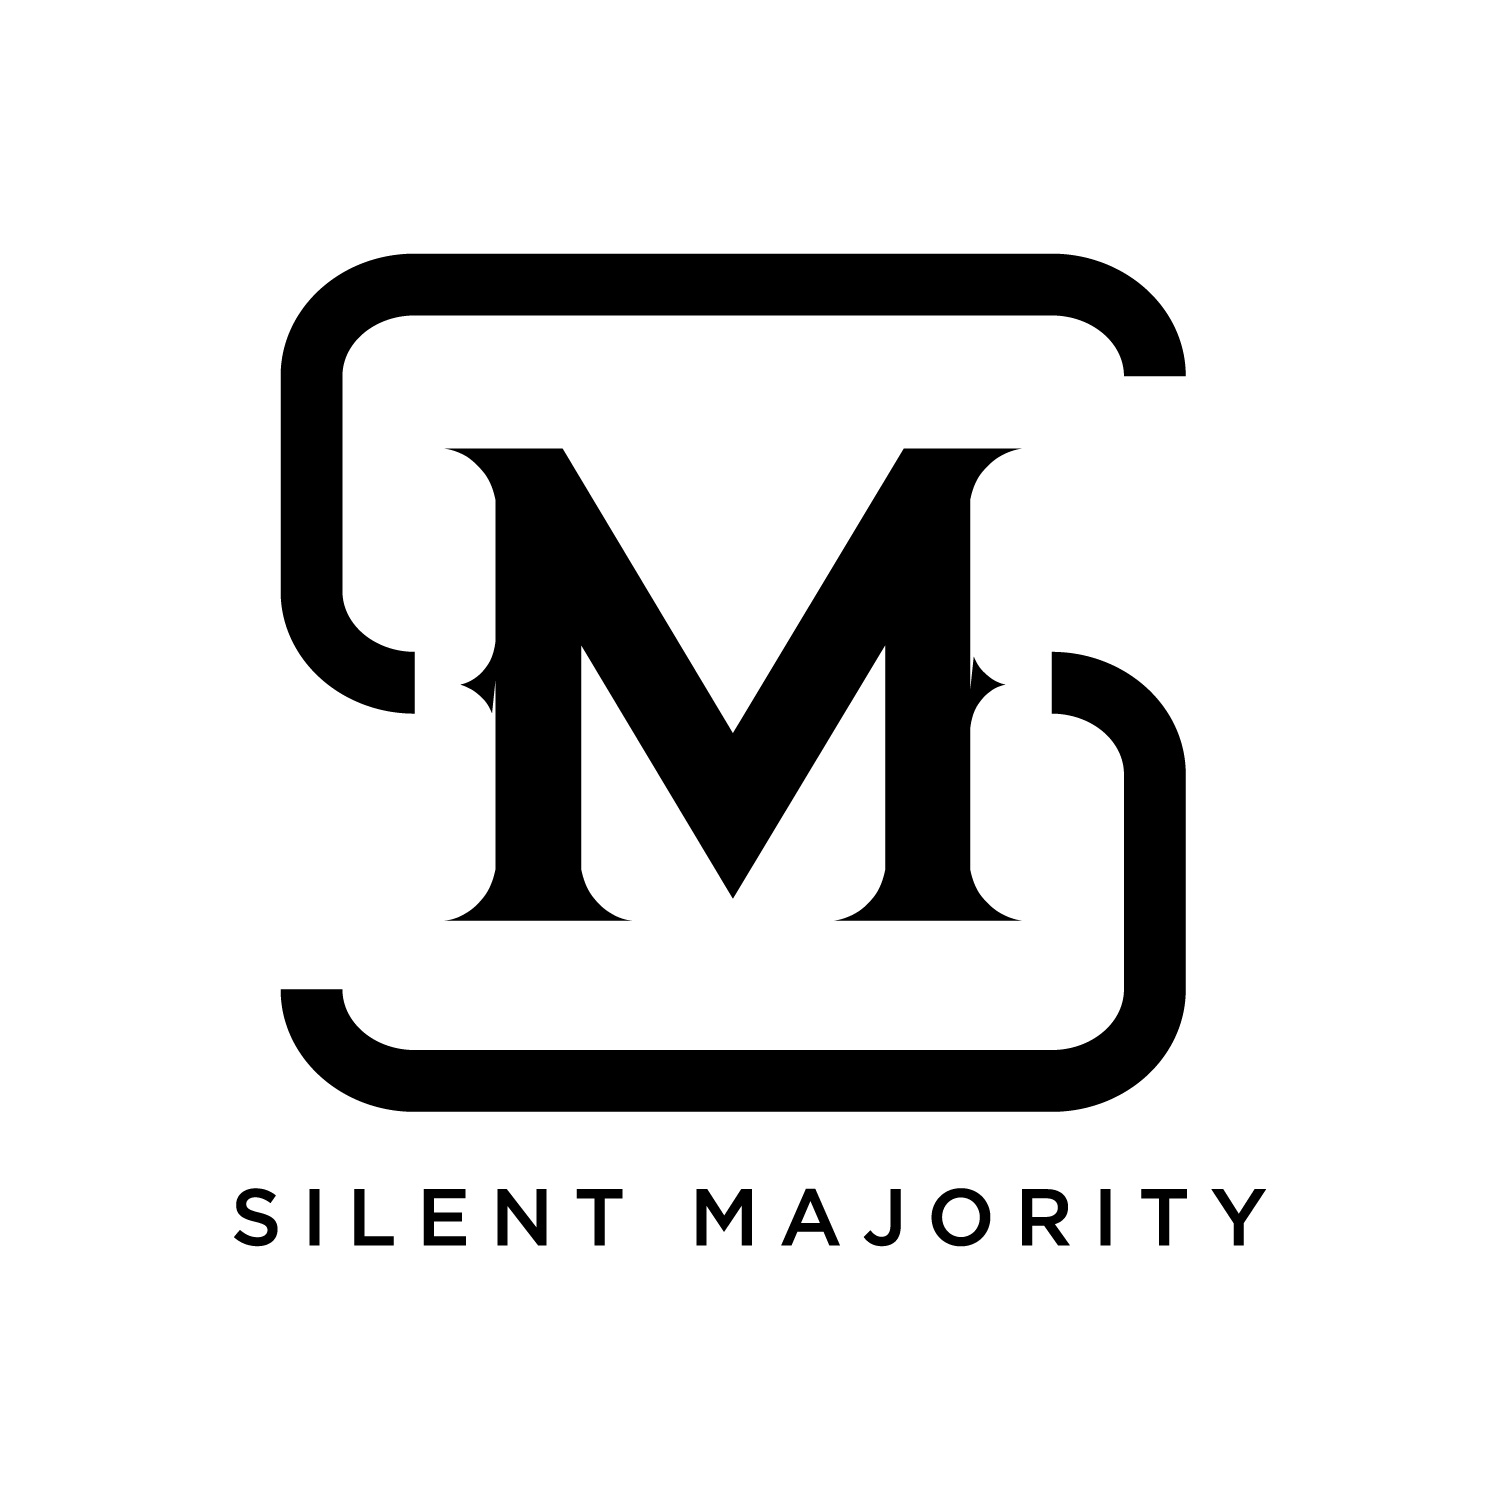 "SILENT MAJORITY RECORDS"